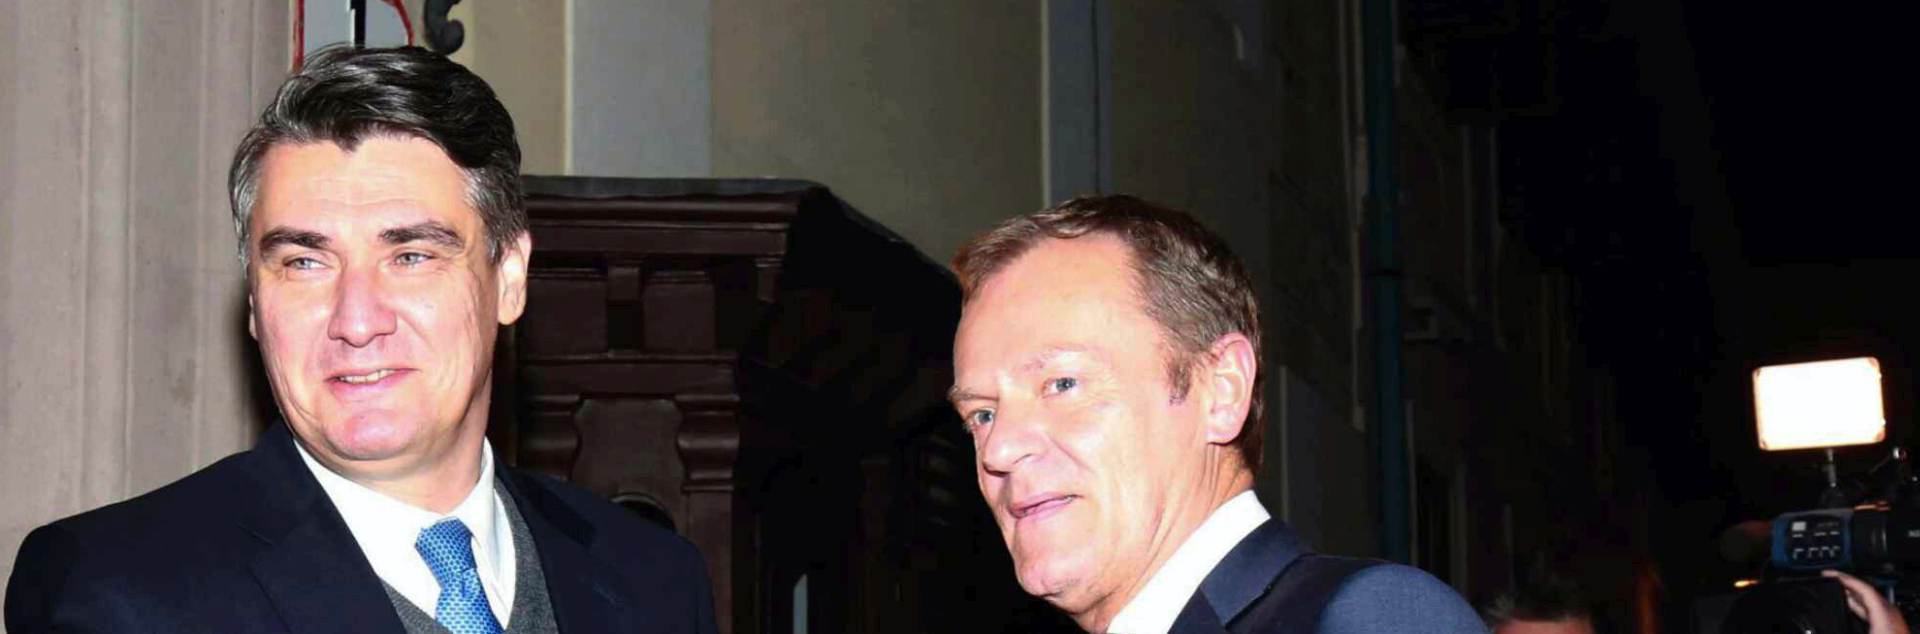 Zagreb, 24.11.2015. - Premijer Zoran Milanoviæ sastao se s predsjednikom Europskog vijeæa Donaldom Tuskom.
foto HINA / Tomislav PAVLEK / mm